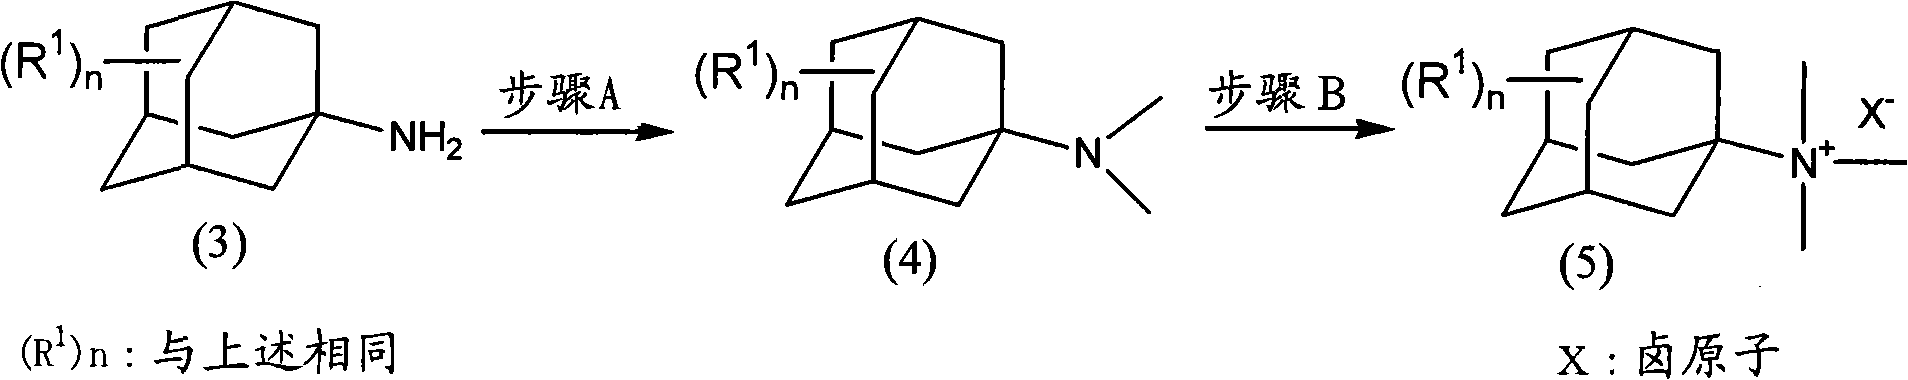 Method for producing amine series and quaternary ammonium salts with adamantane framework